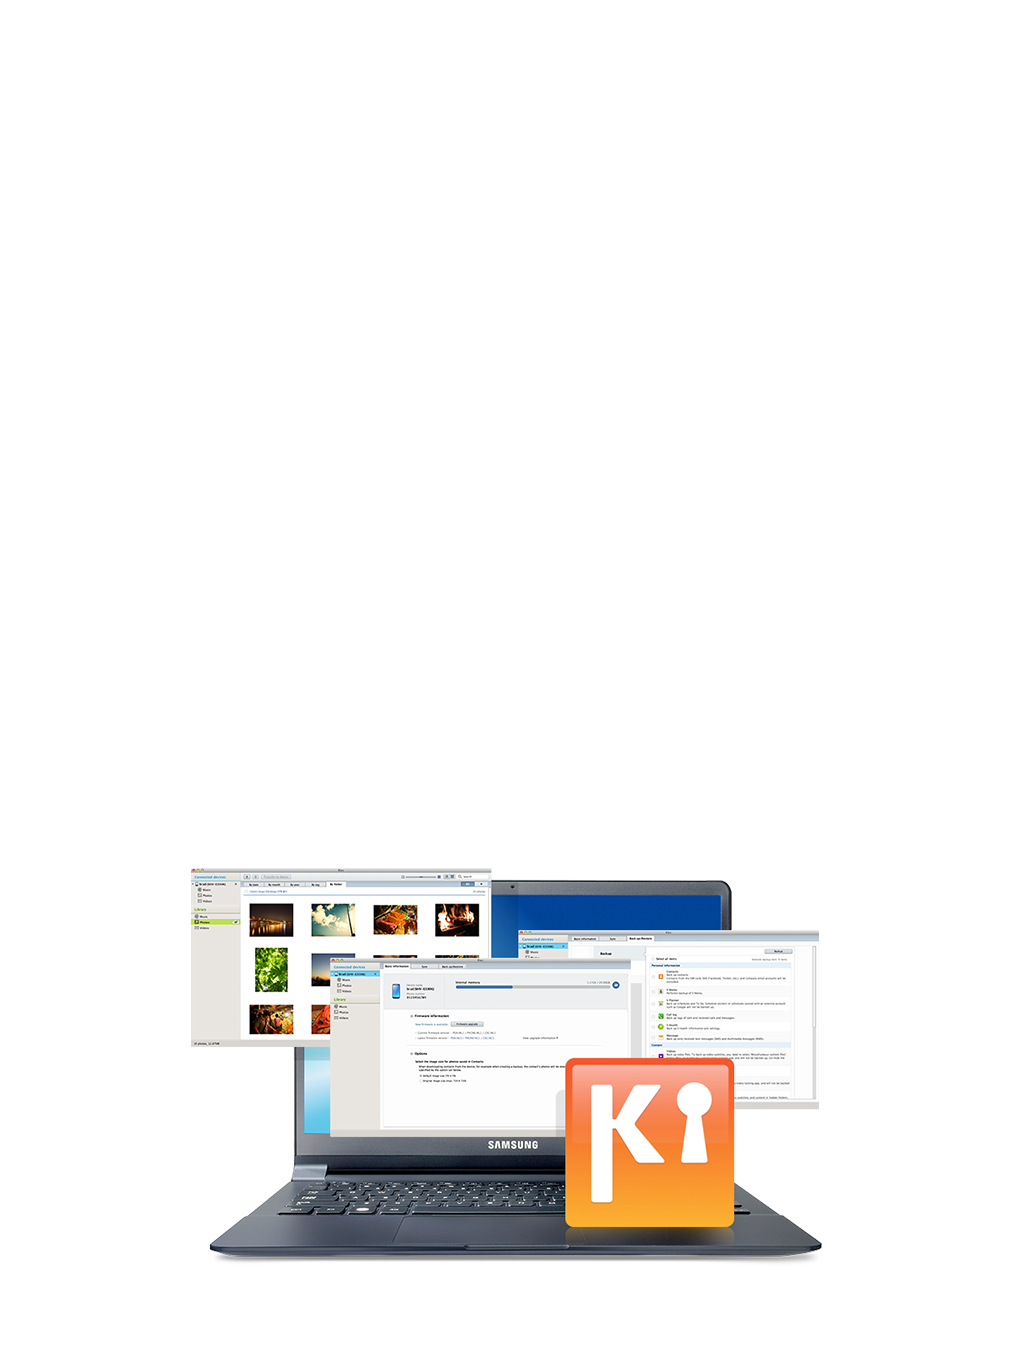 Internet Explorer 7 Free Download For Mac Os X